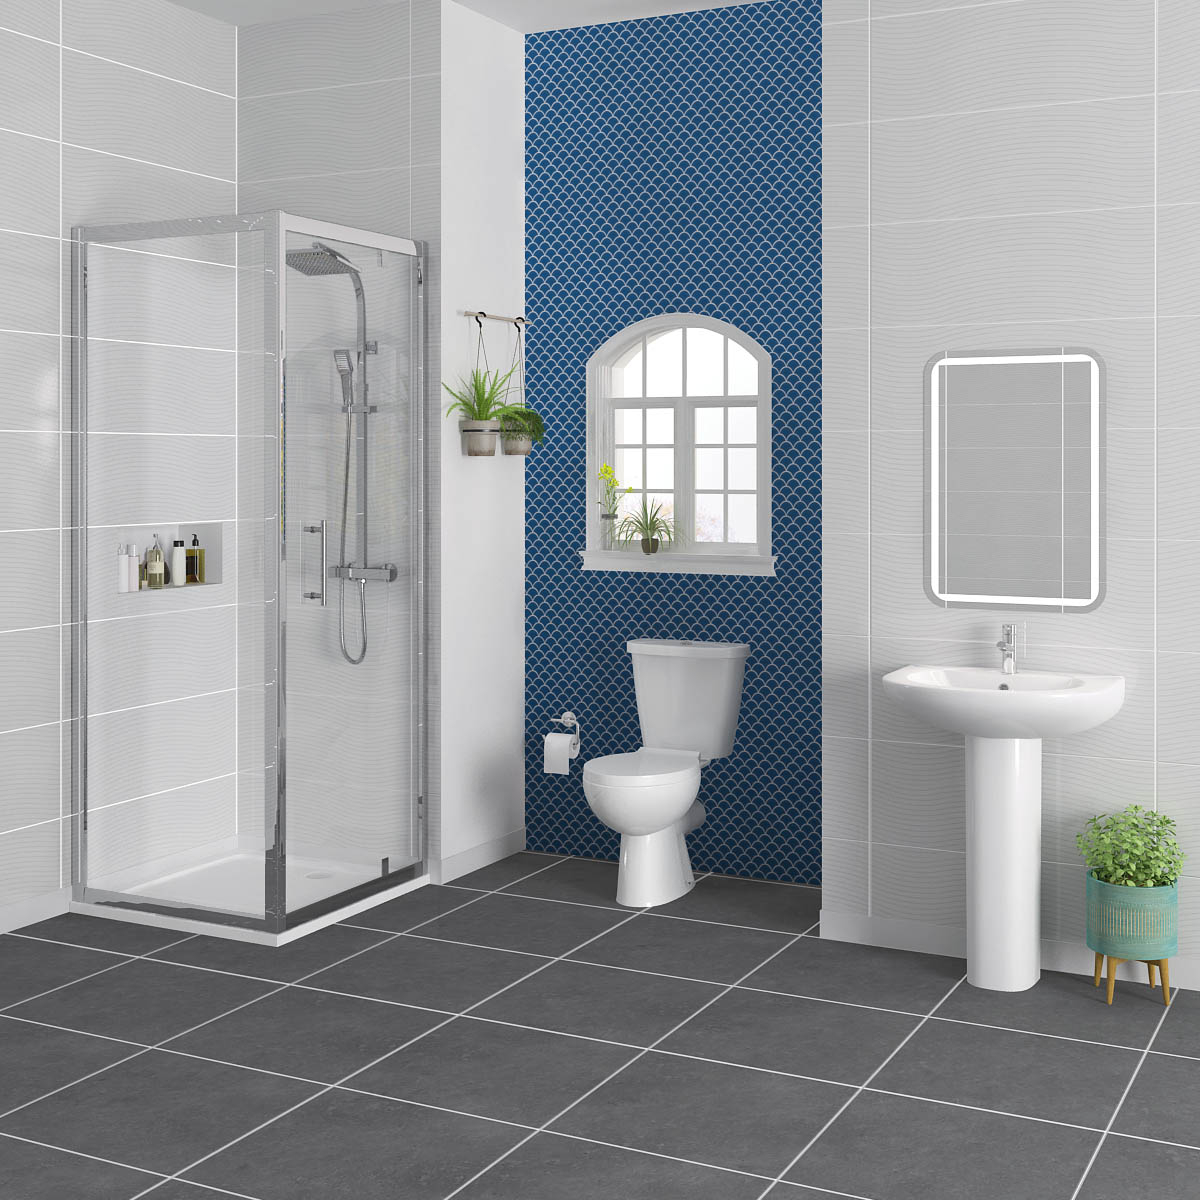 Bathroom Suite Shower Cubicle Enclosure Corner Pivot Door Toilet Basin ...